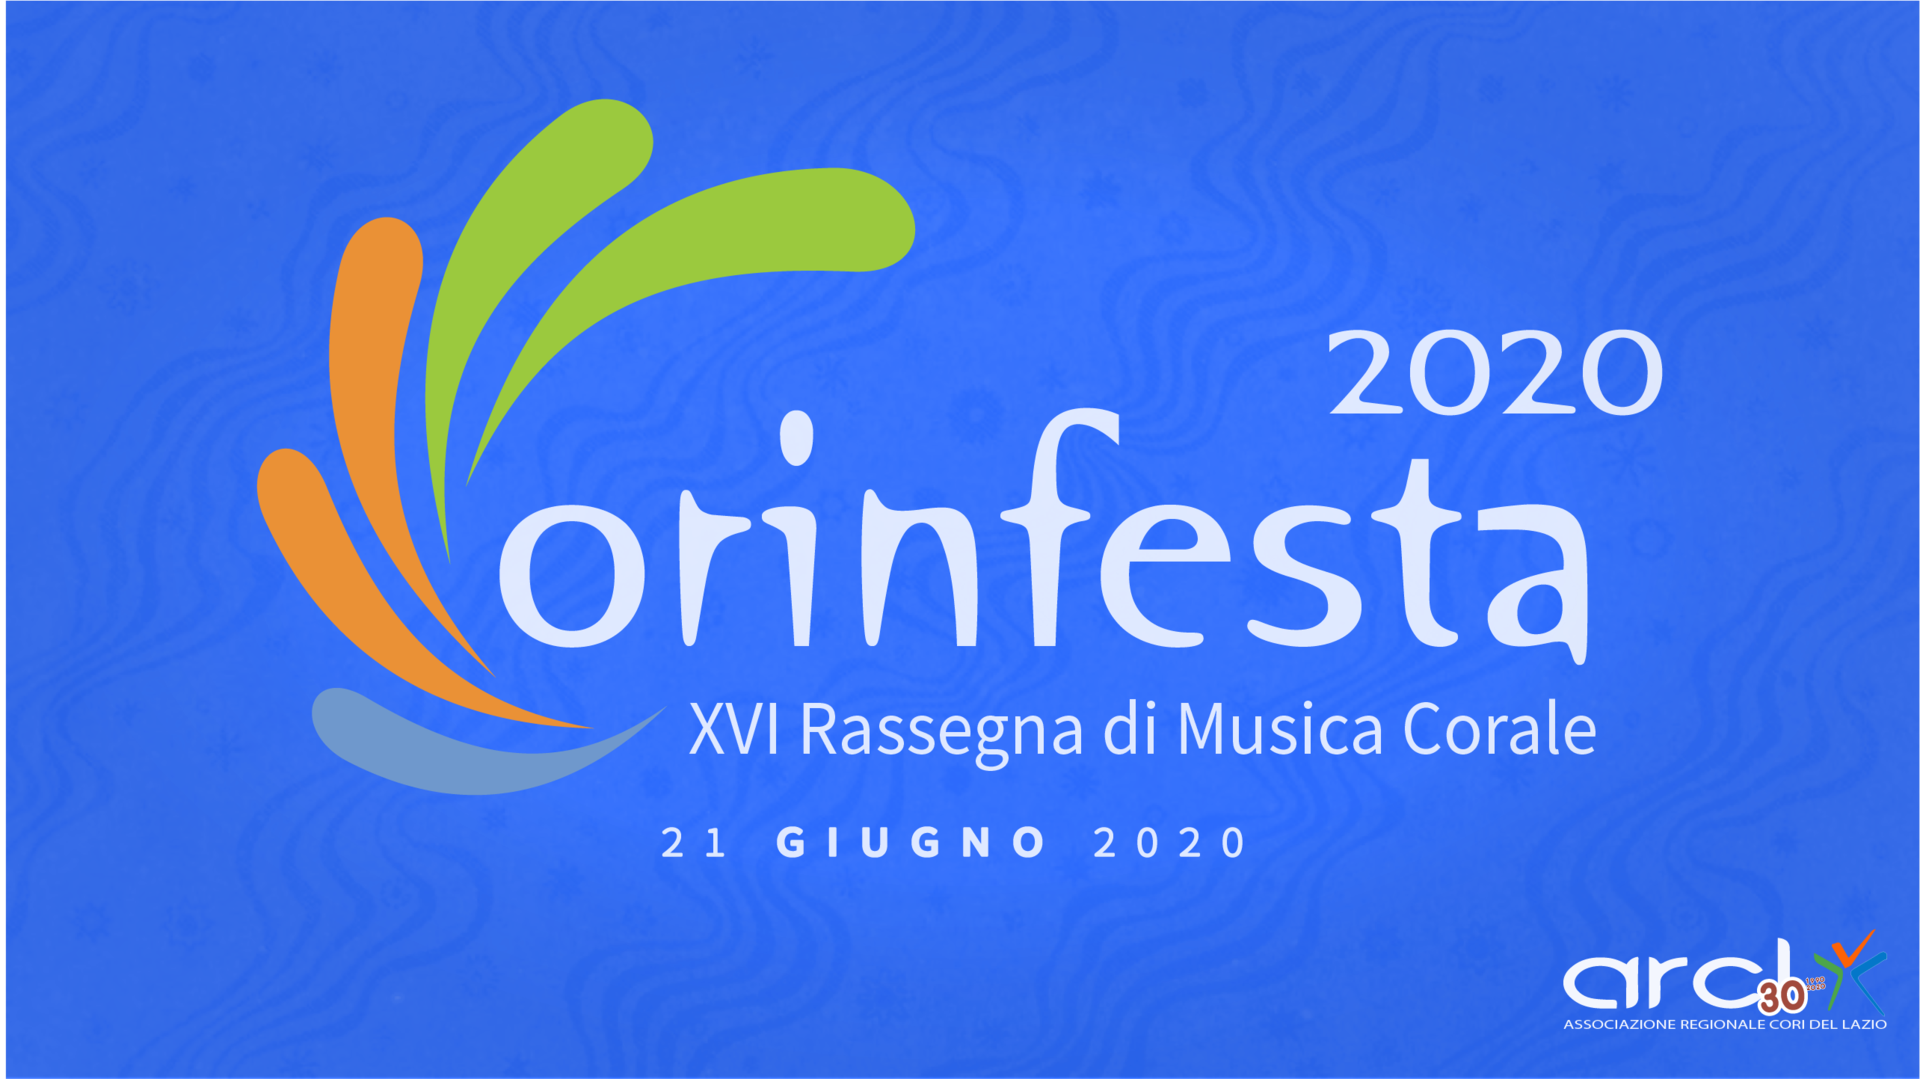 corinfesta 2020 - XVI Rassegna di Musica Corale